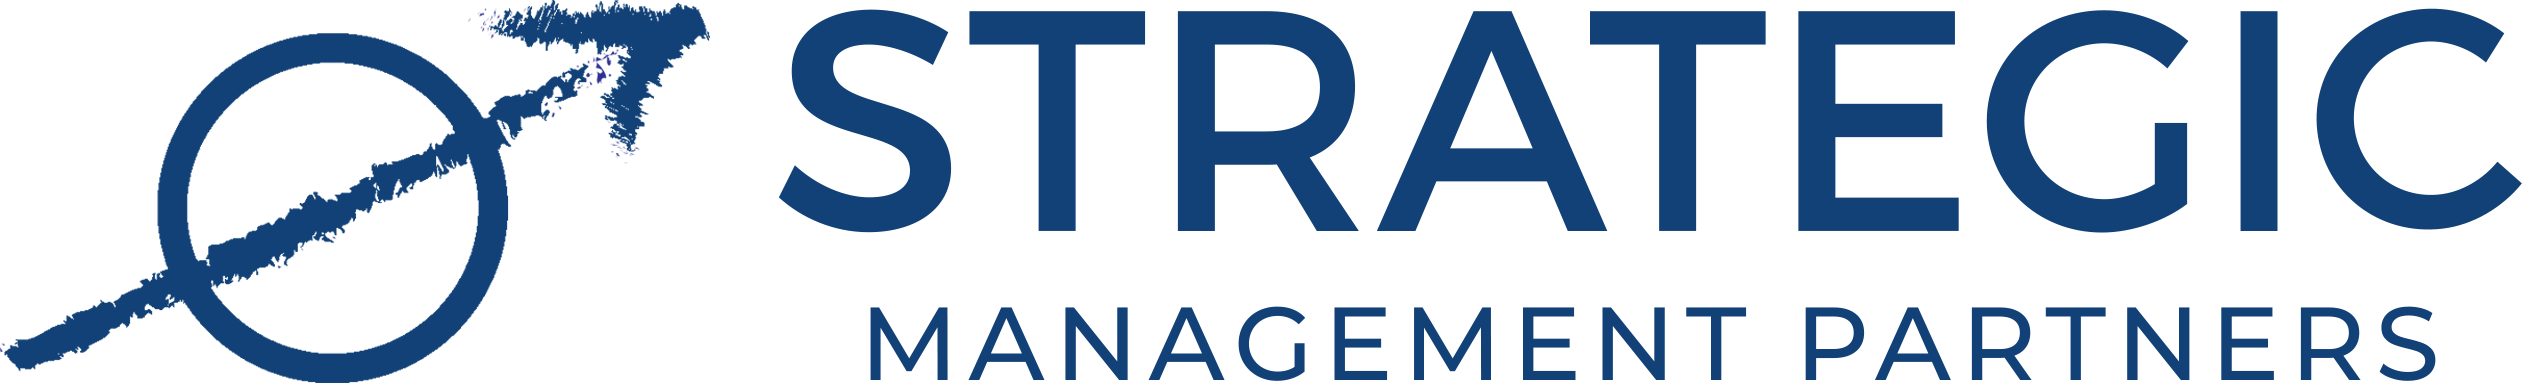 Strategic Management Partners logo